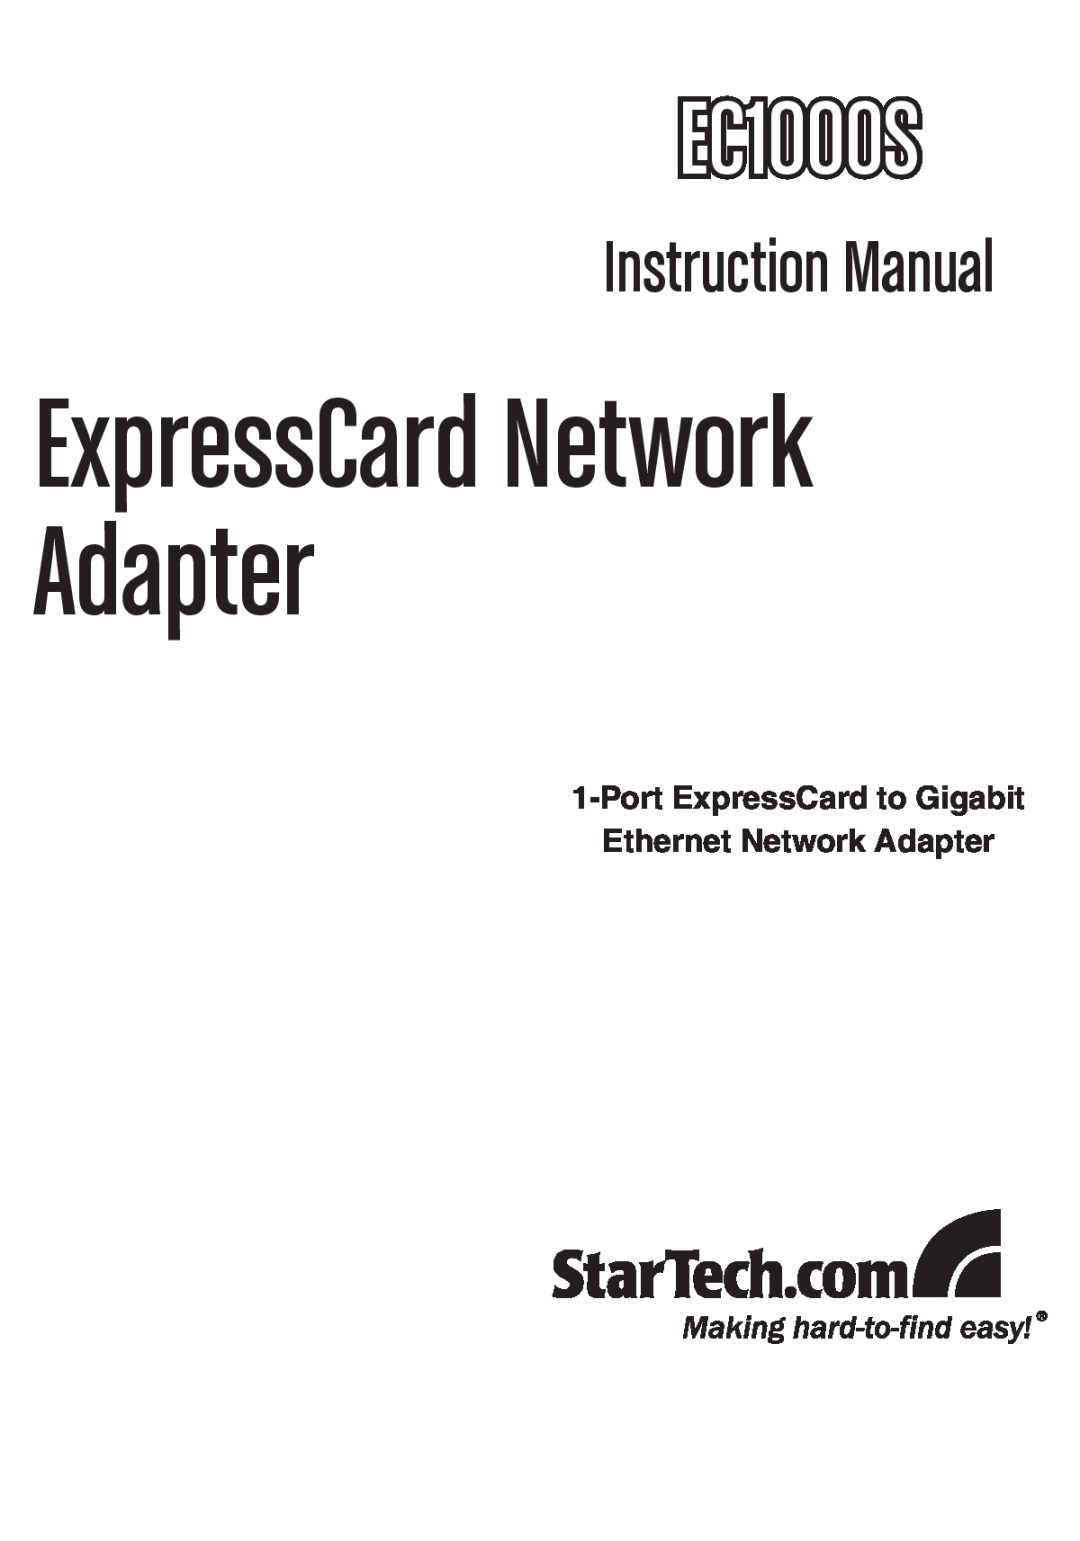 StarTech.com EC1000S instruction manual Port ExpressCard to Gigabit Ethernet Network Adapter, ExpressCard Network Adapter 